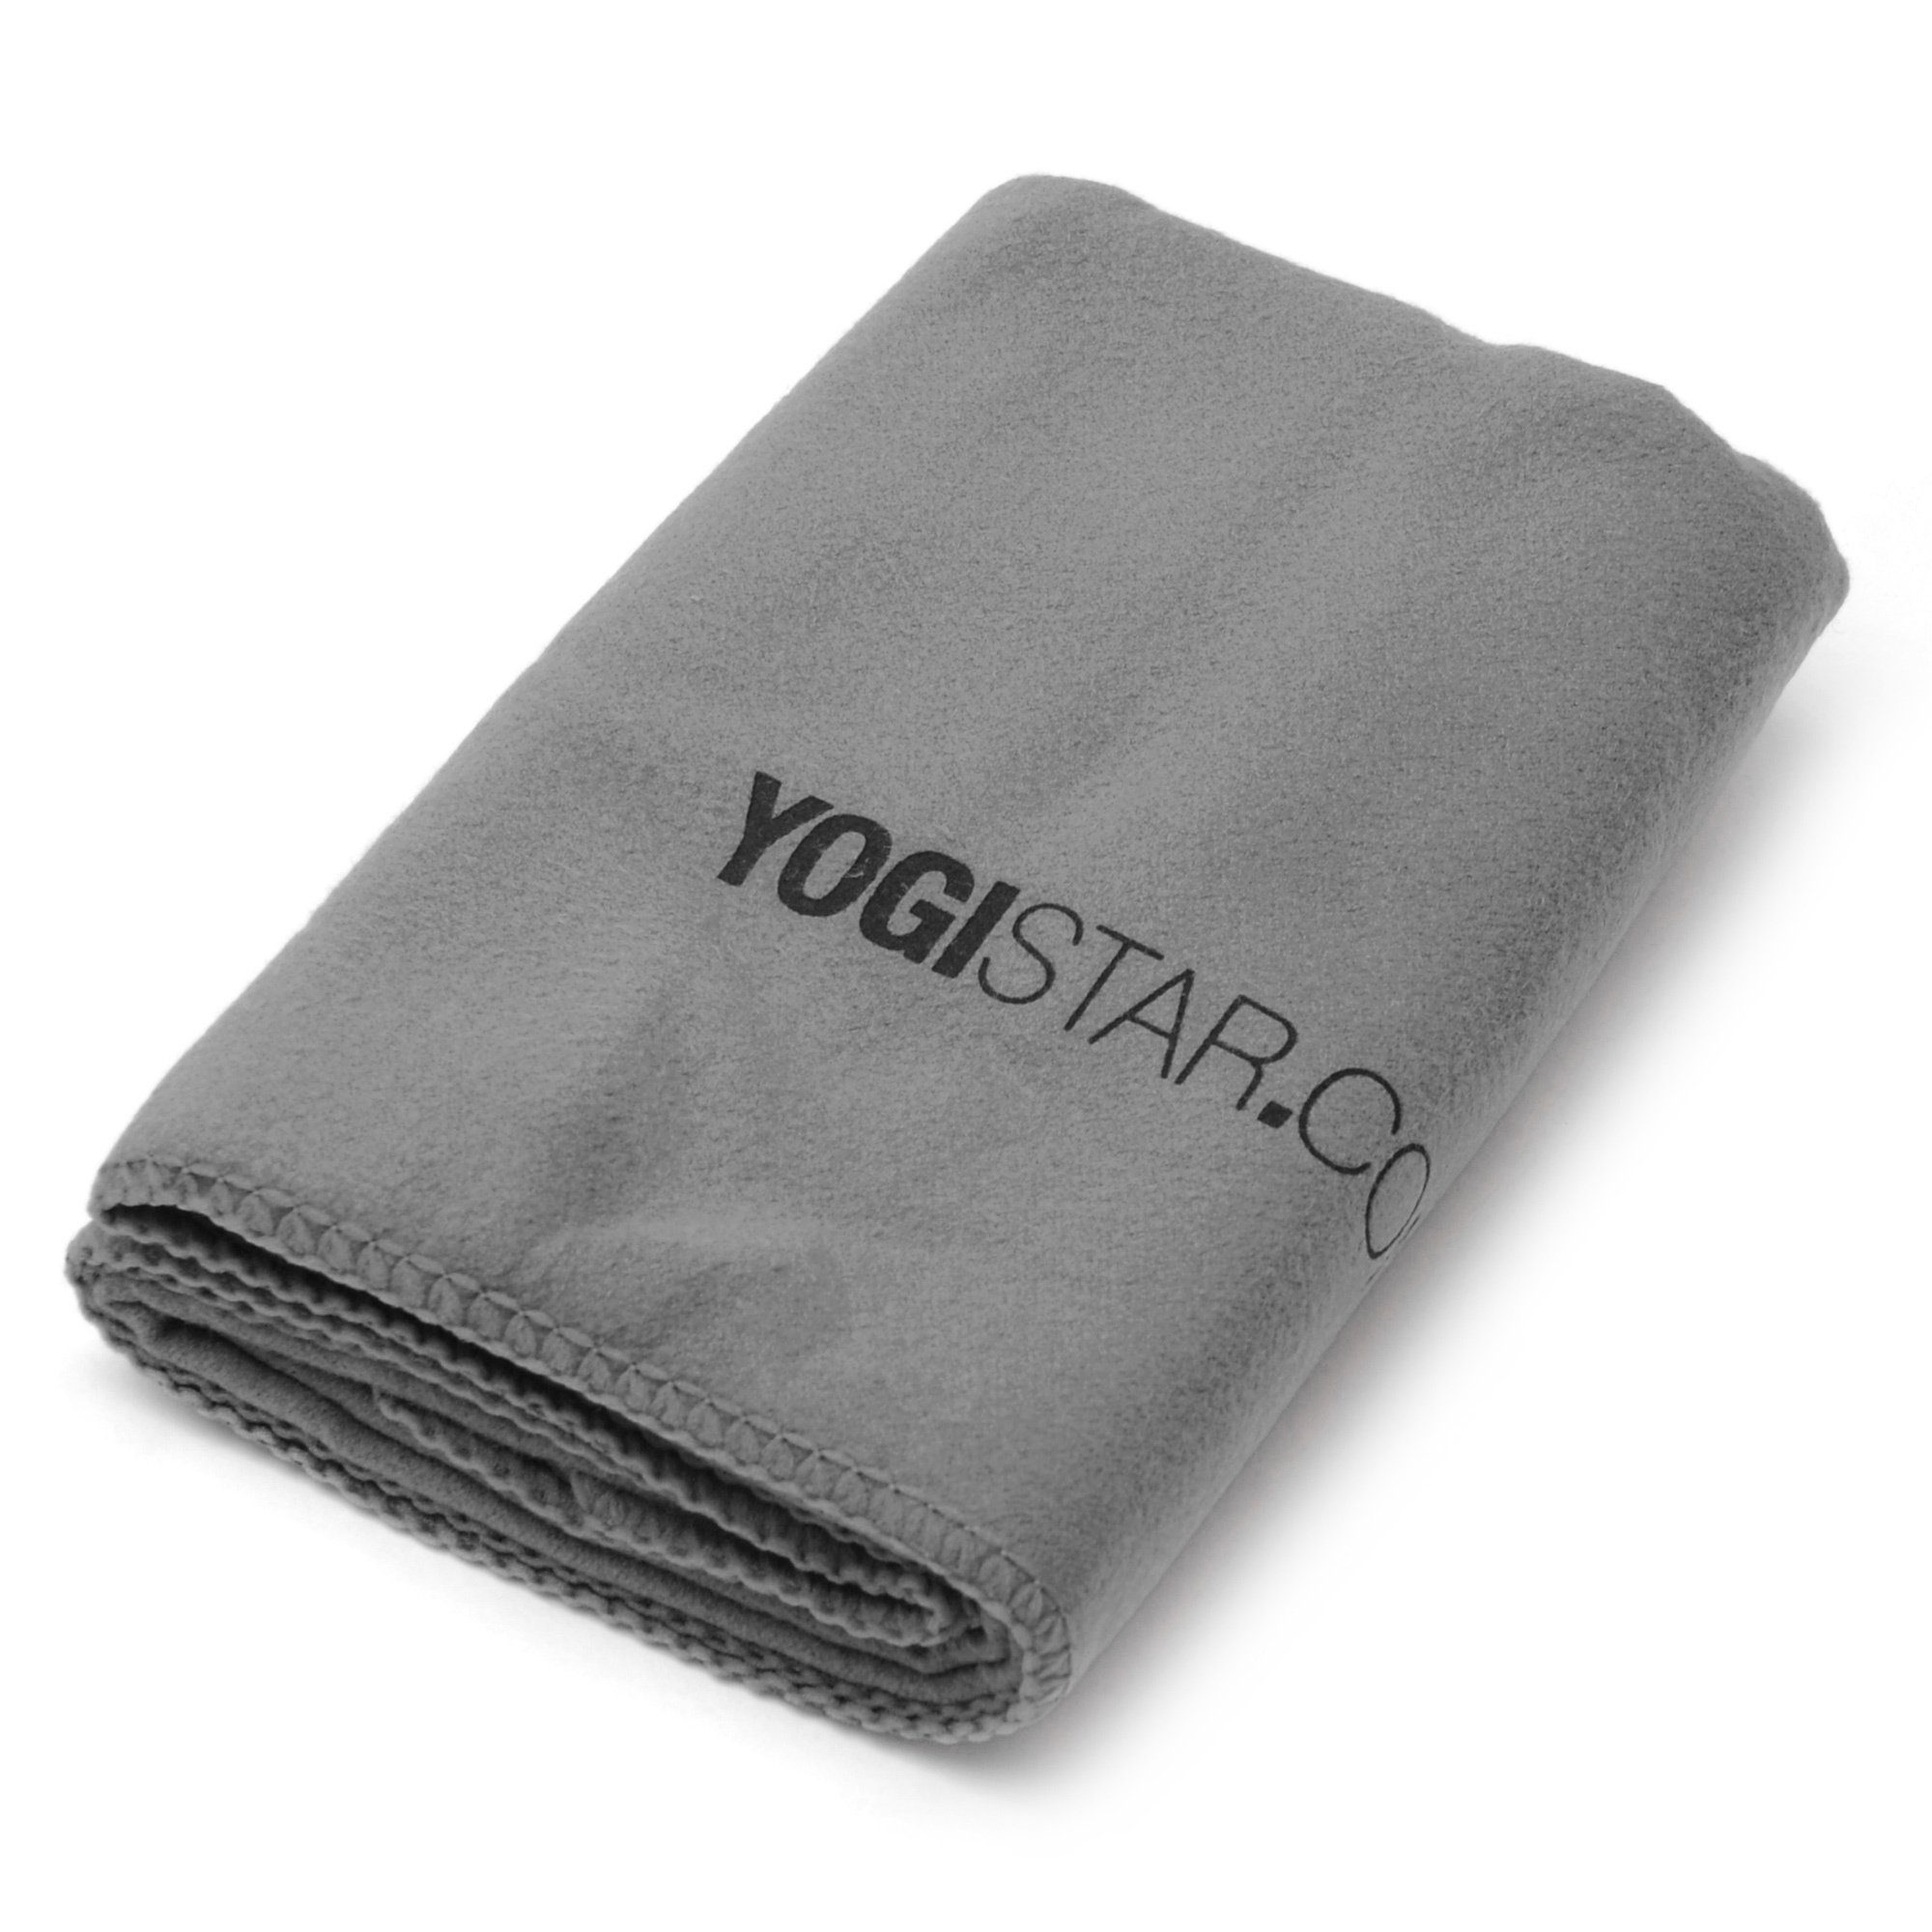 Towel, Yogistar (1-St) Mikrofaser Sporthandtuch Yogatuch Mini pink